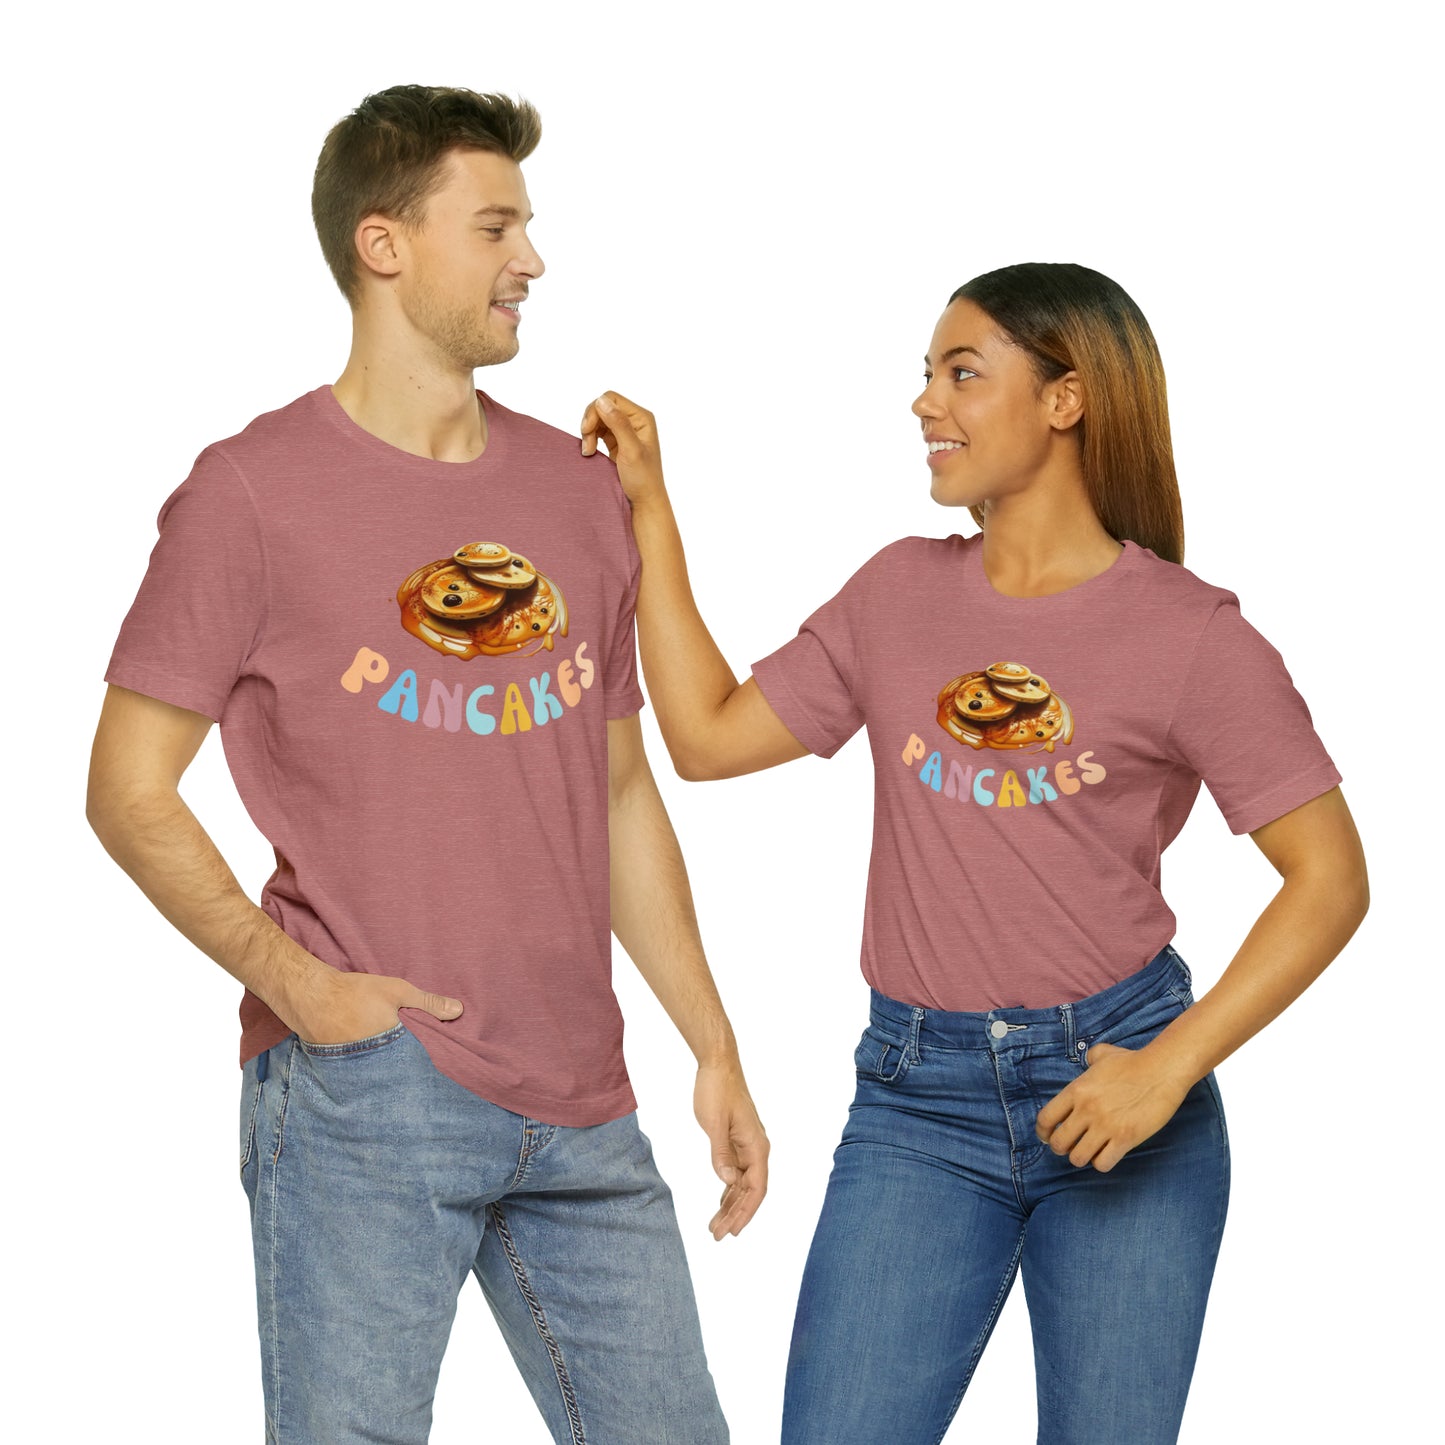 Pancakes Shirt, Pastry Chef Shirt, Baking Mom Shirt, Retro Pancakes Shirt, Pancake Lover Shirt, T272